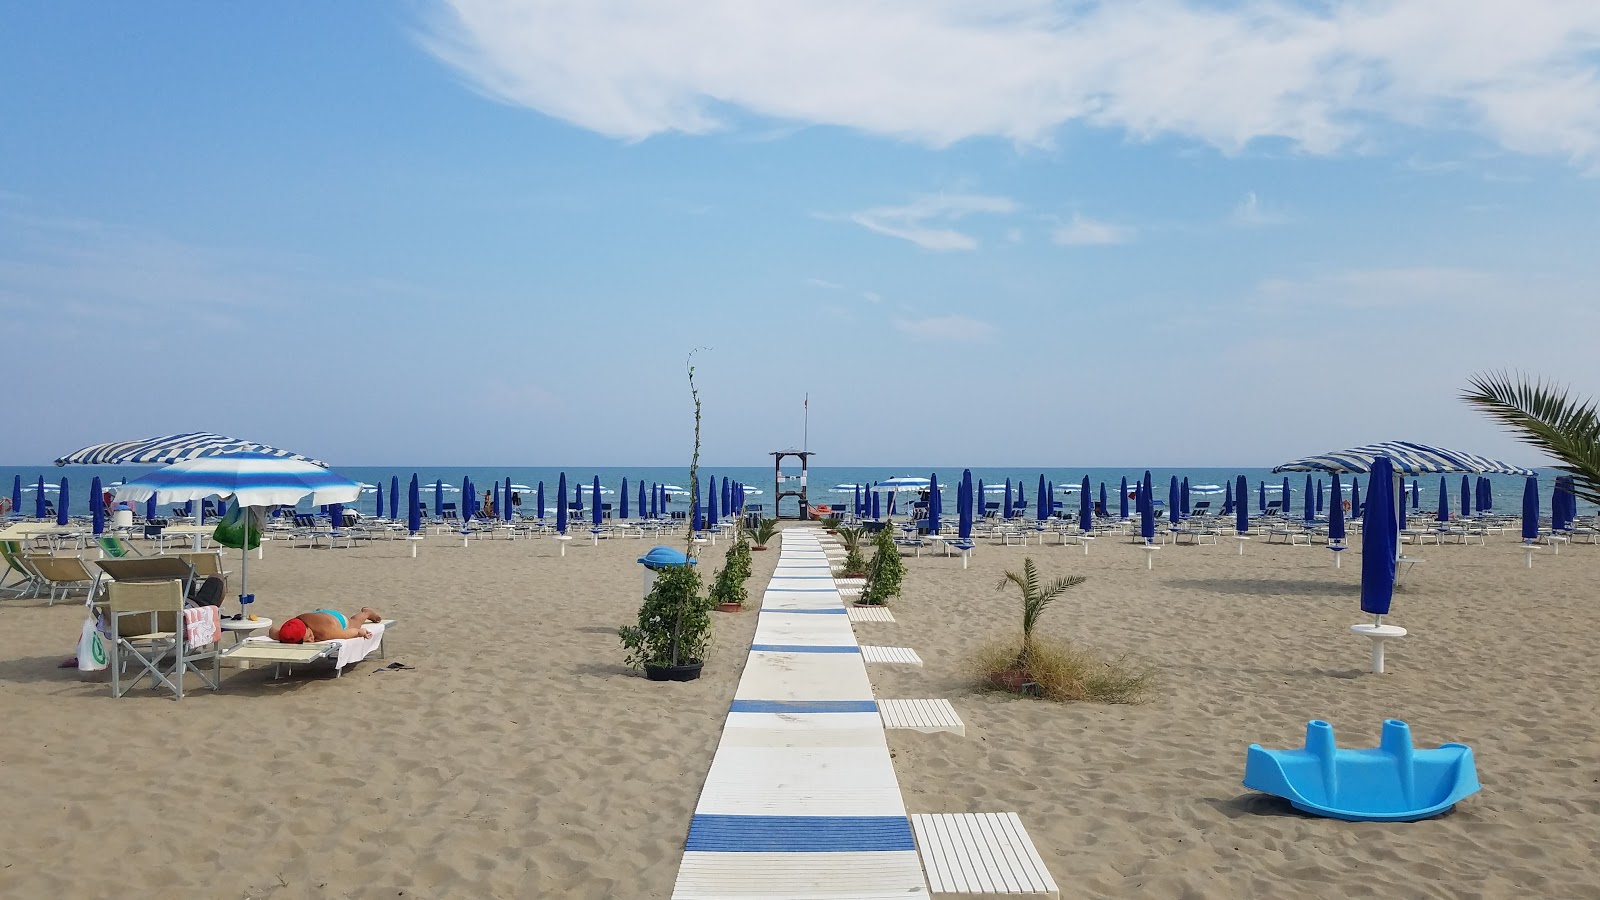 Foto de Playa de Marina di Pisticci - lugar popular entre los conocedores del relax